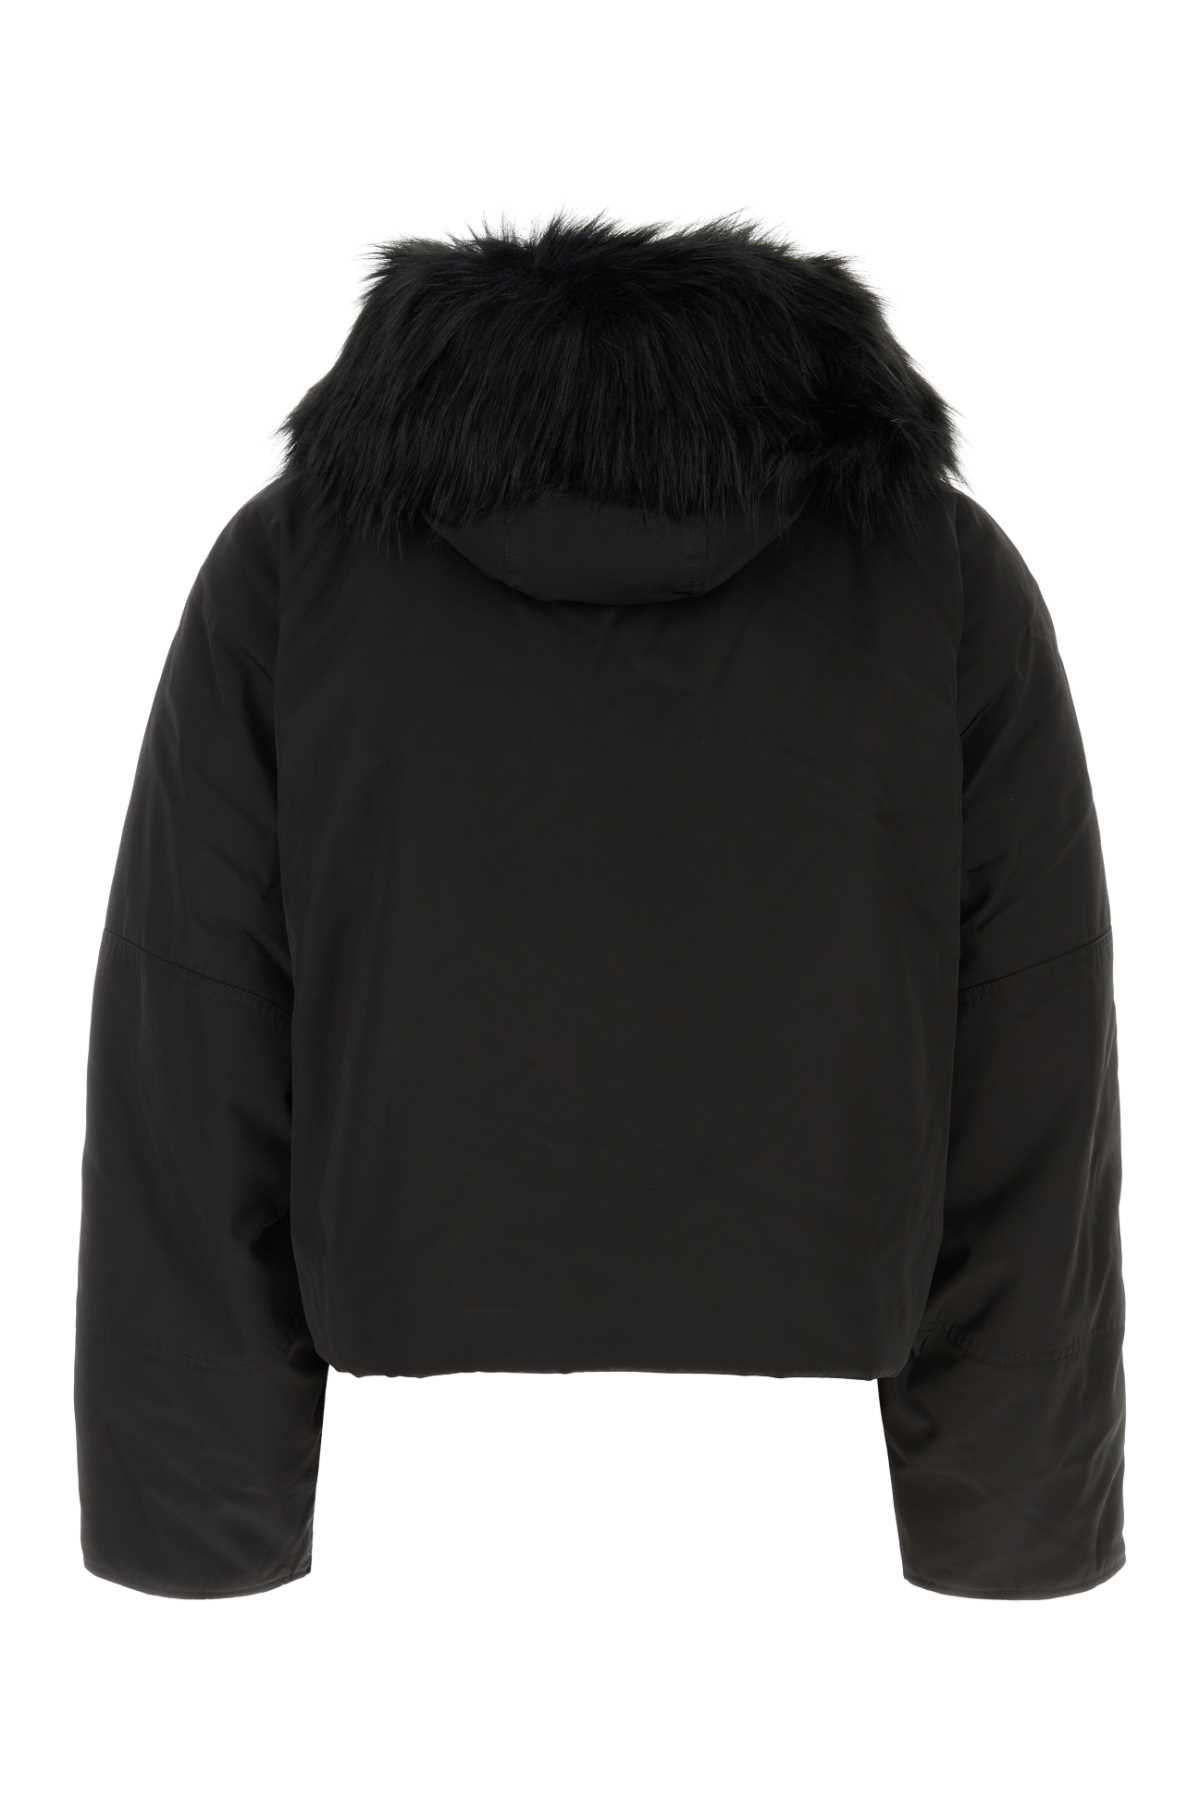 Alyx Black Polyester Padded Jacket